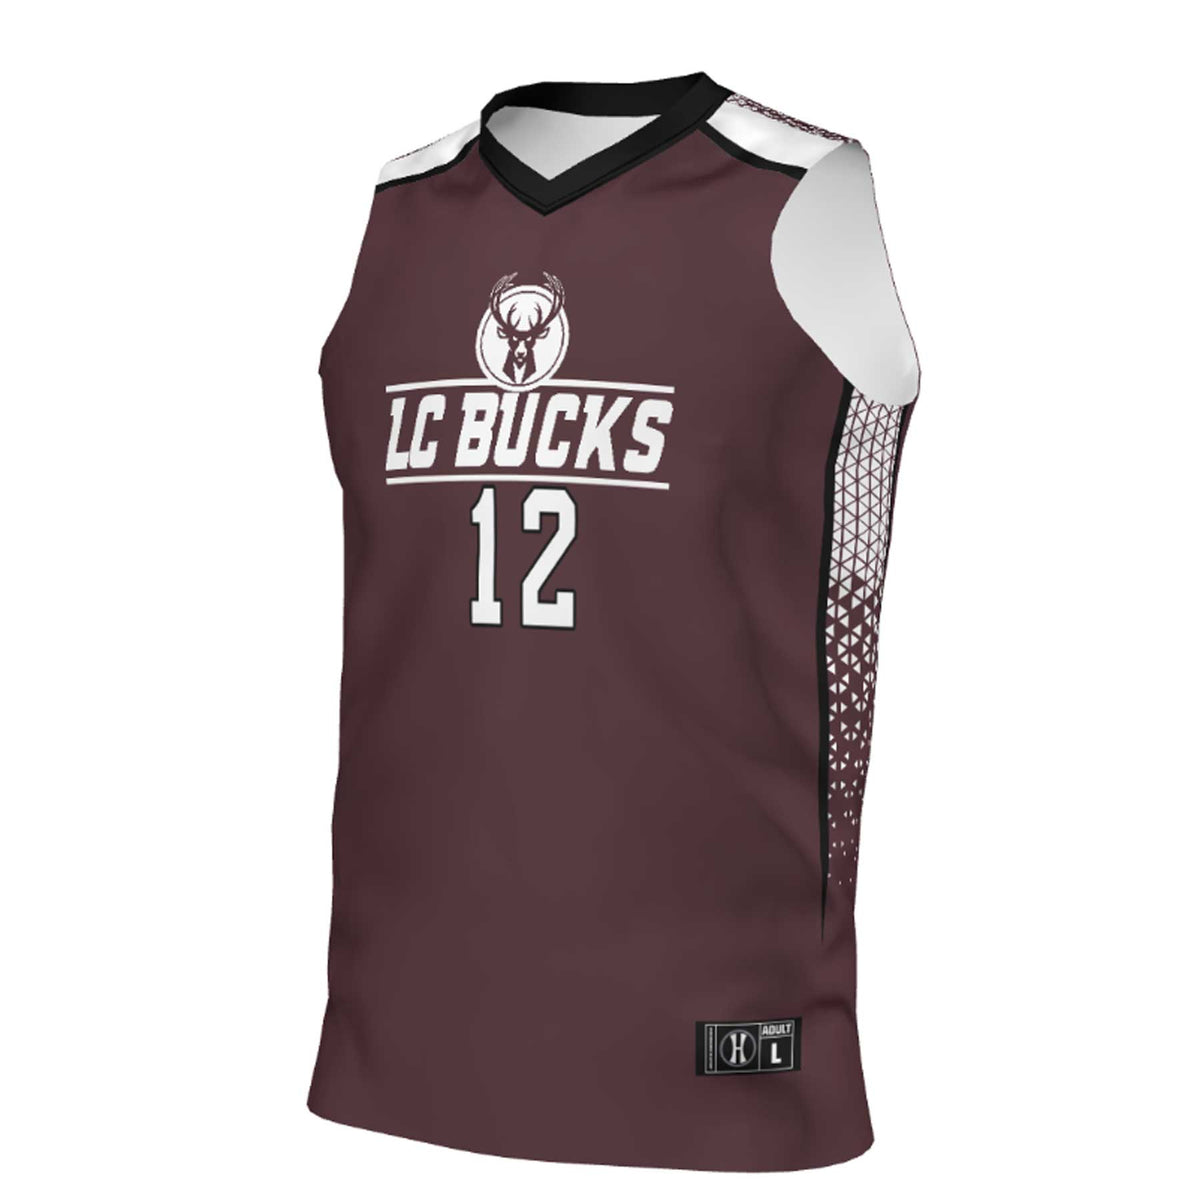 LC Bucks Basketball Jersey